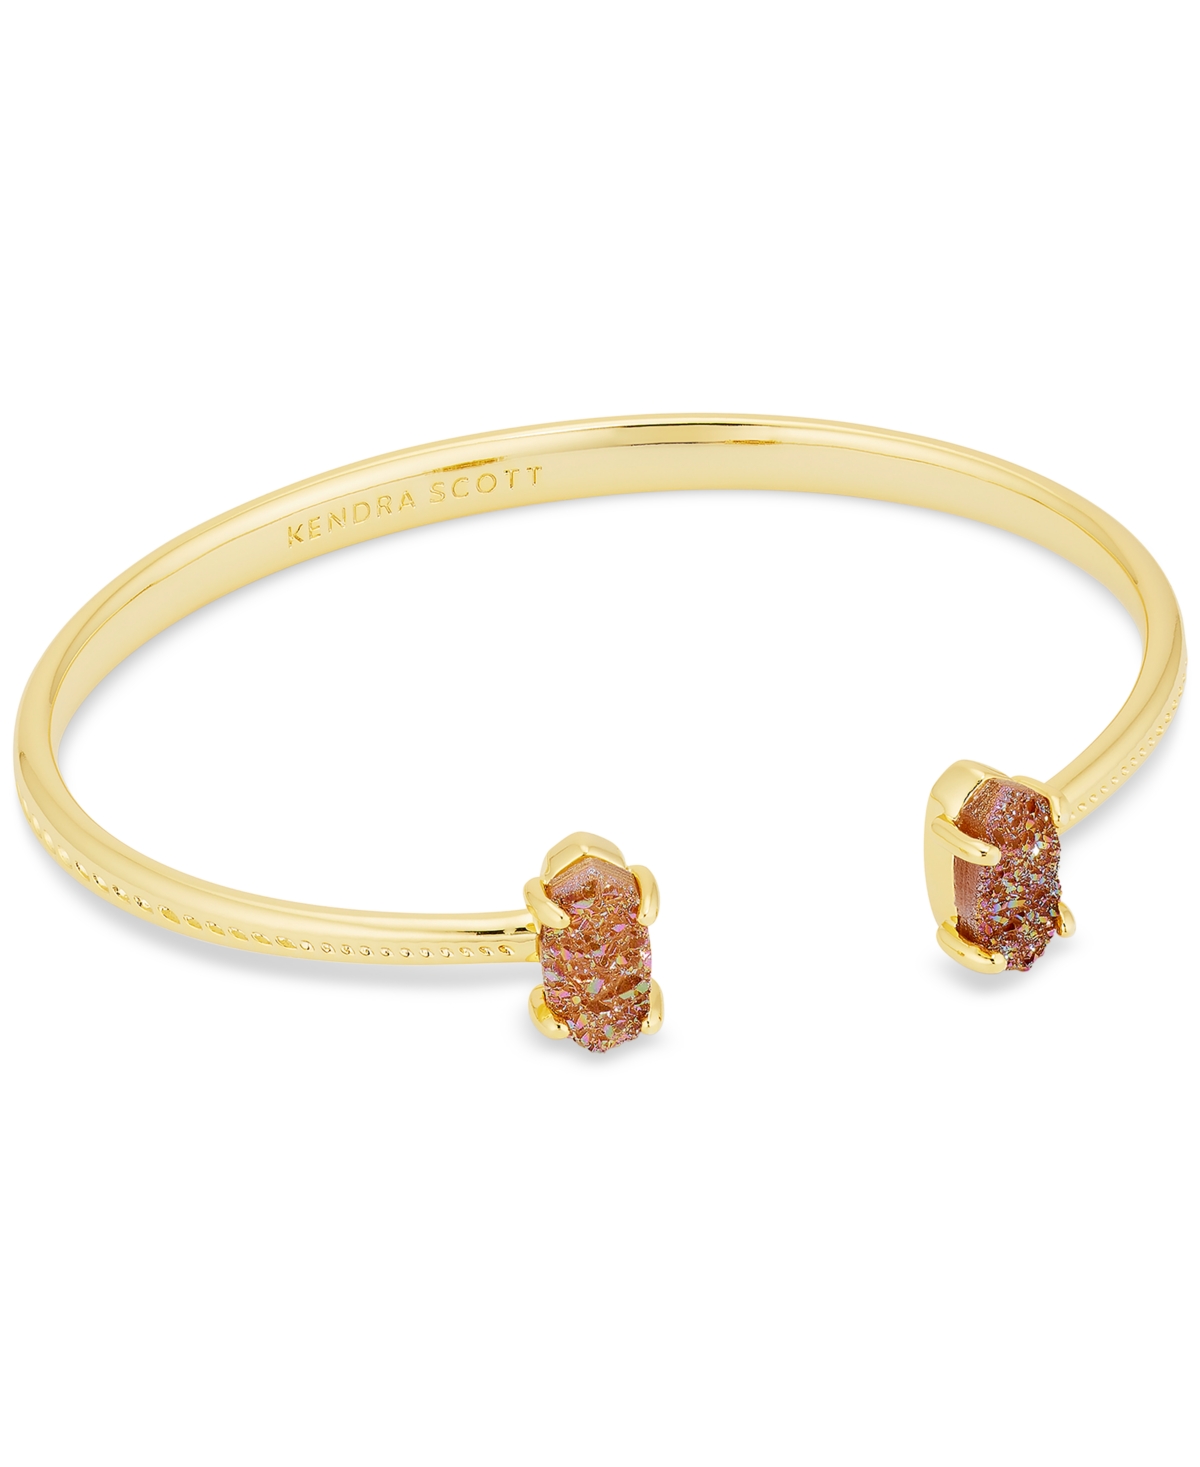 Kendra Scott 14k Gold-plate Stone Cuff Bangle Bracelet In Spice Drusy